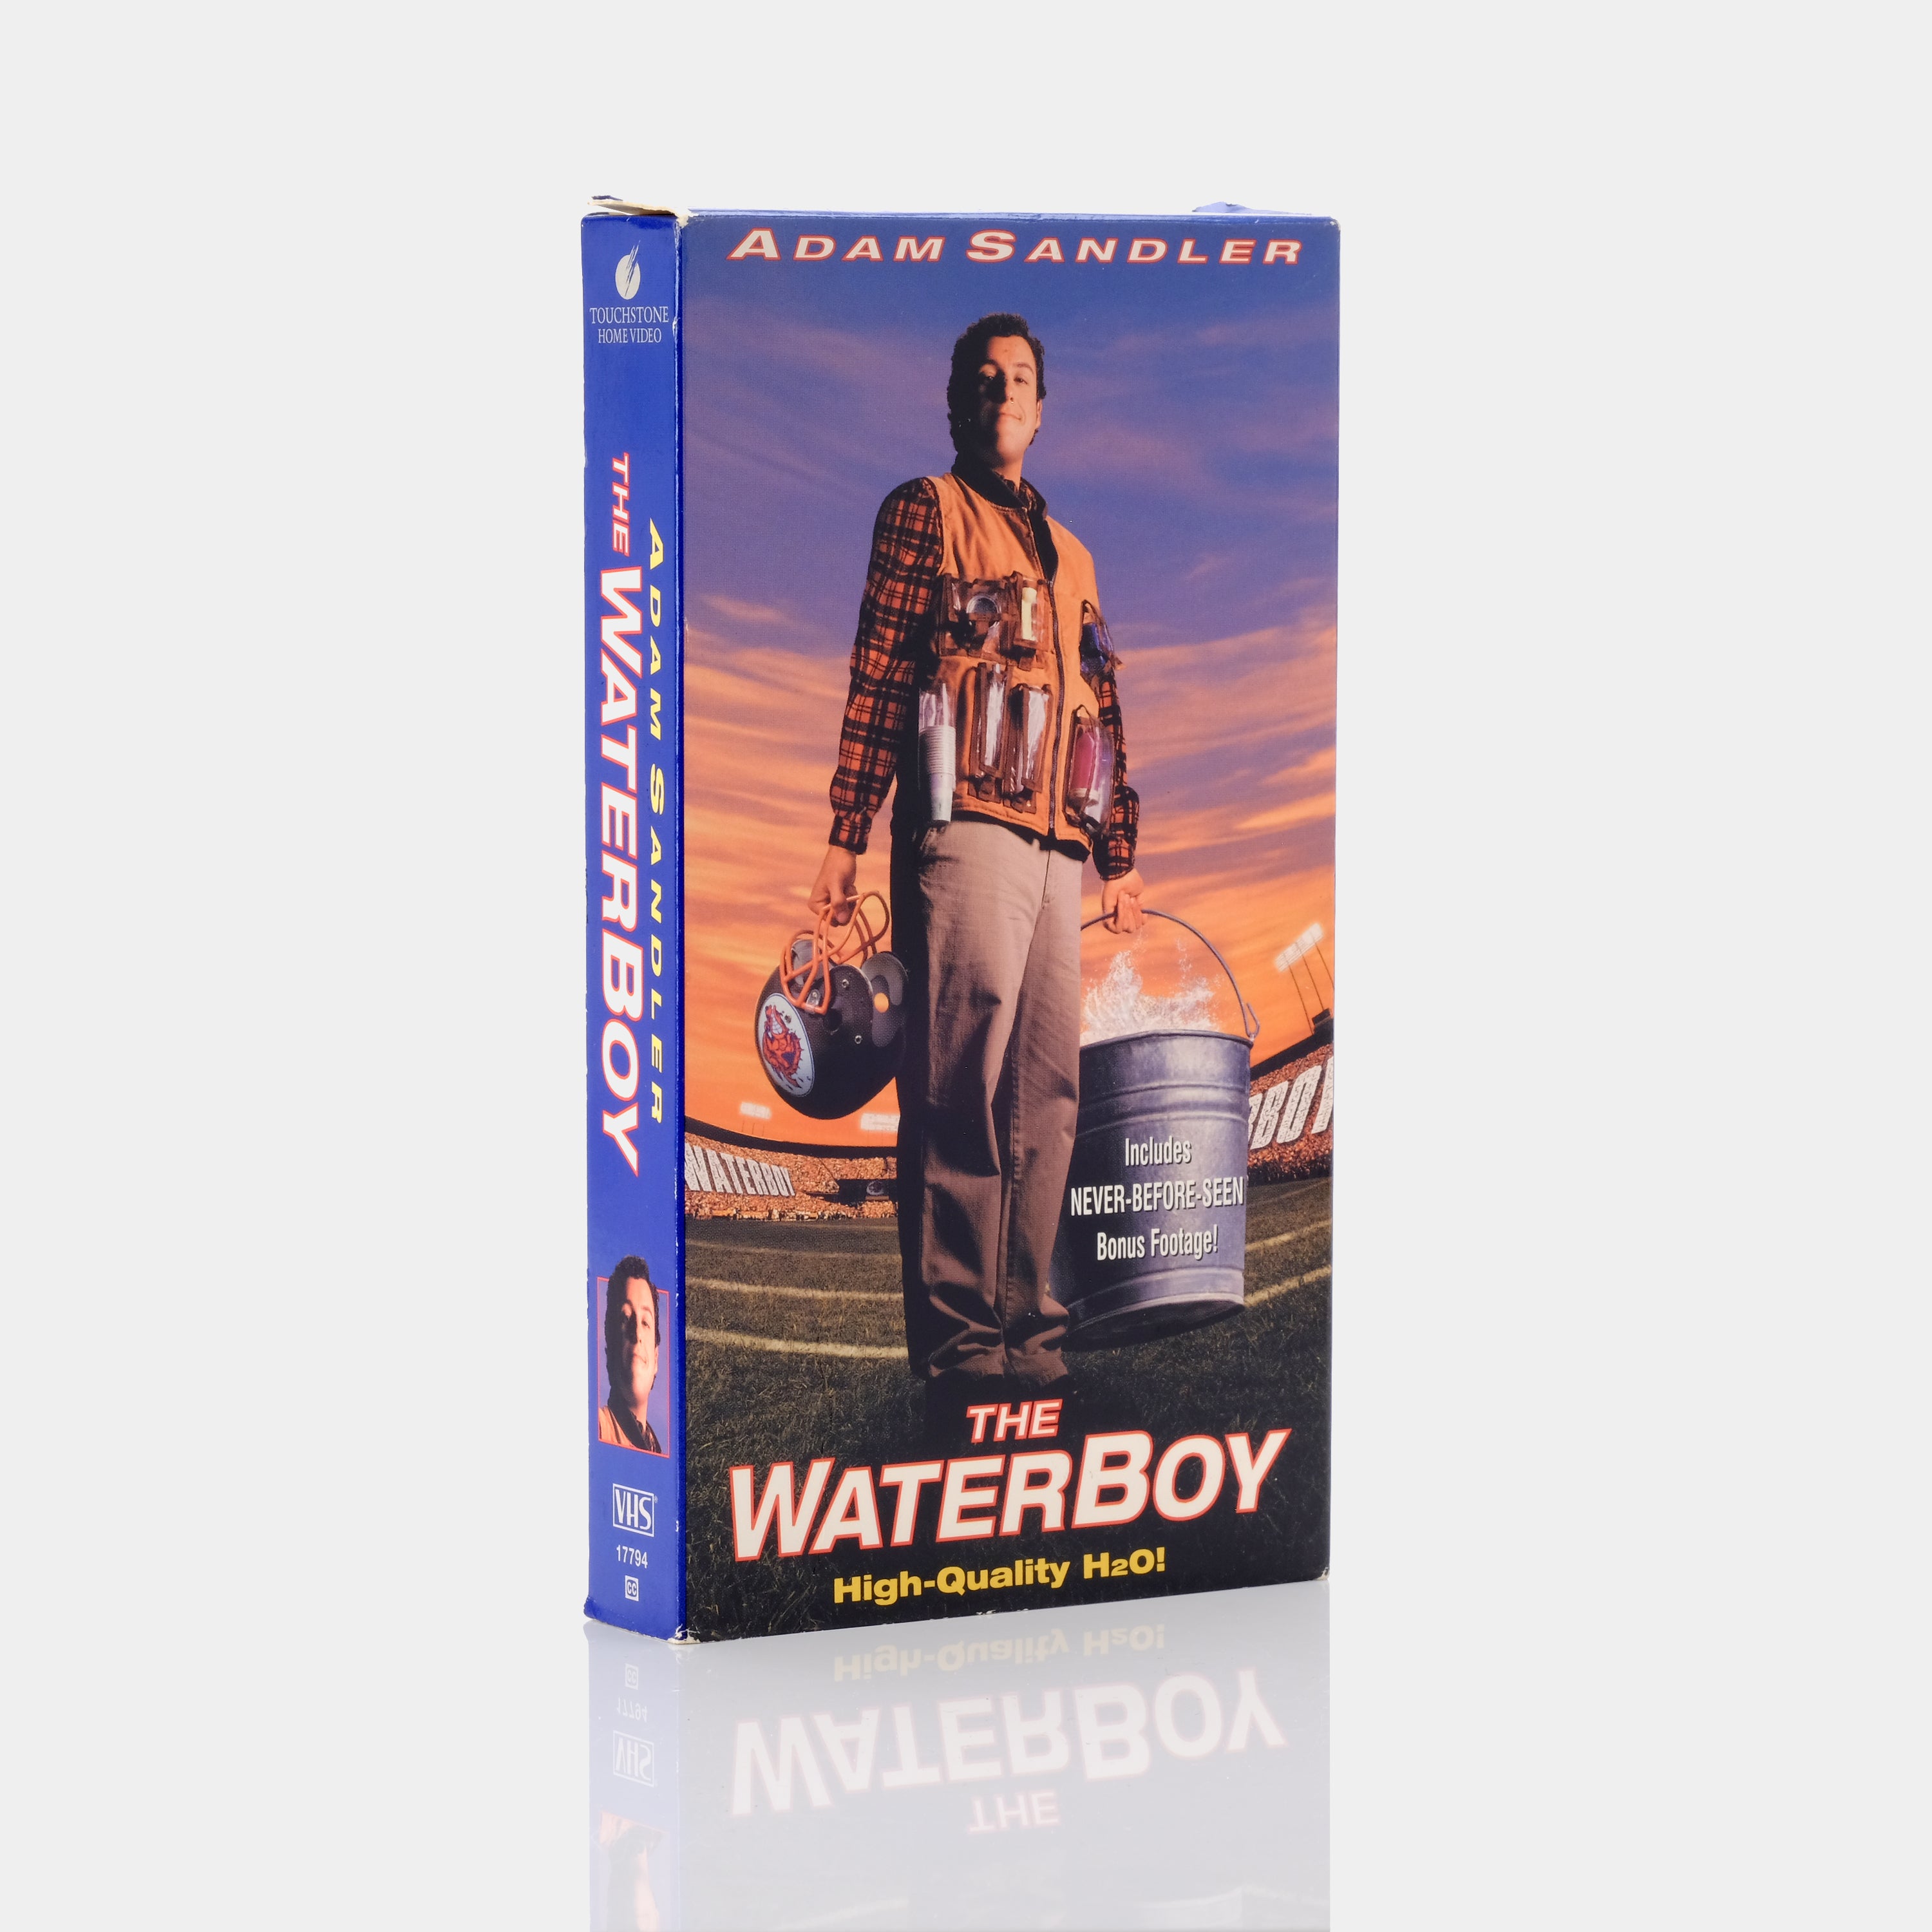 Waterboy